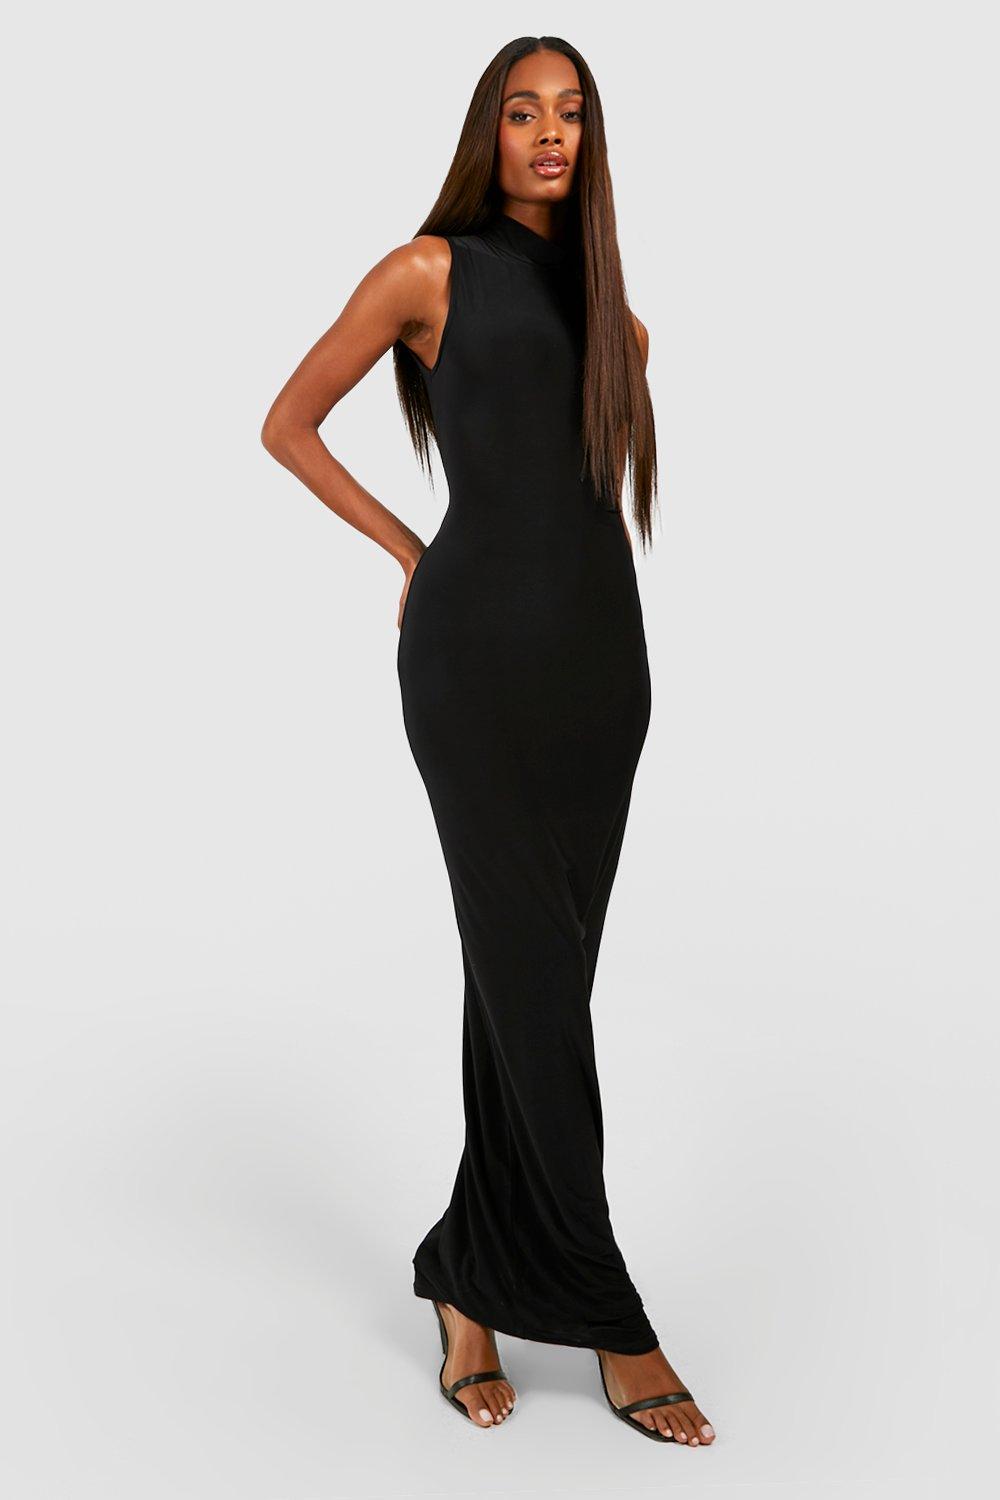 high neck black dress